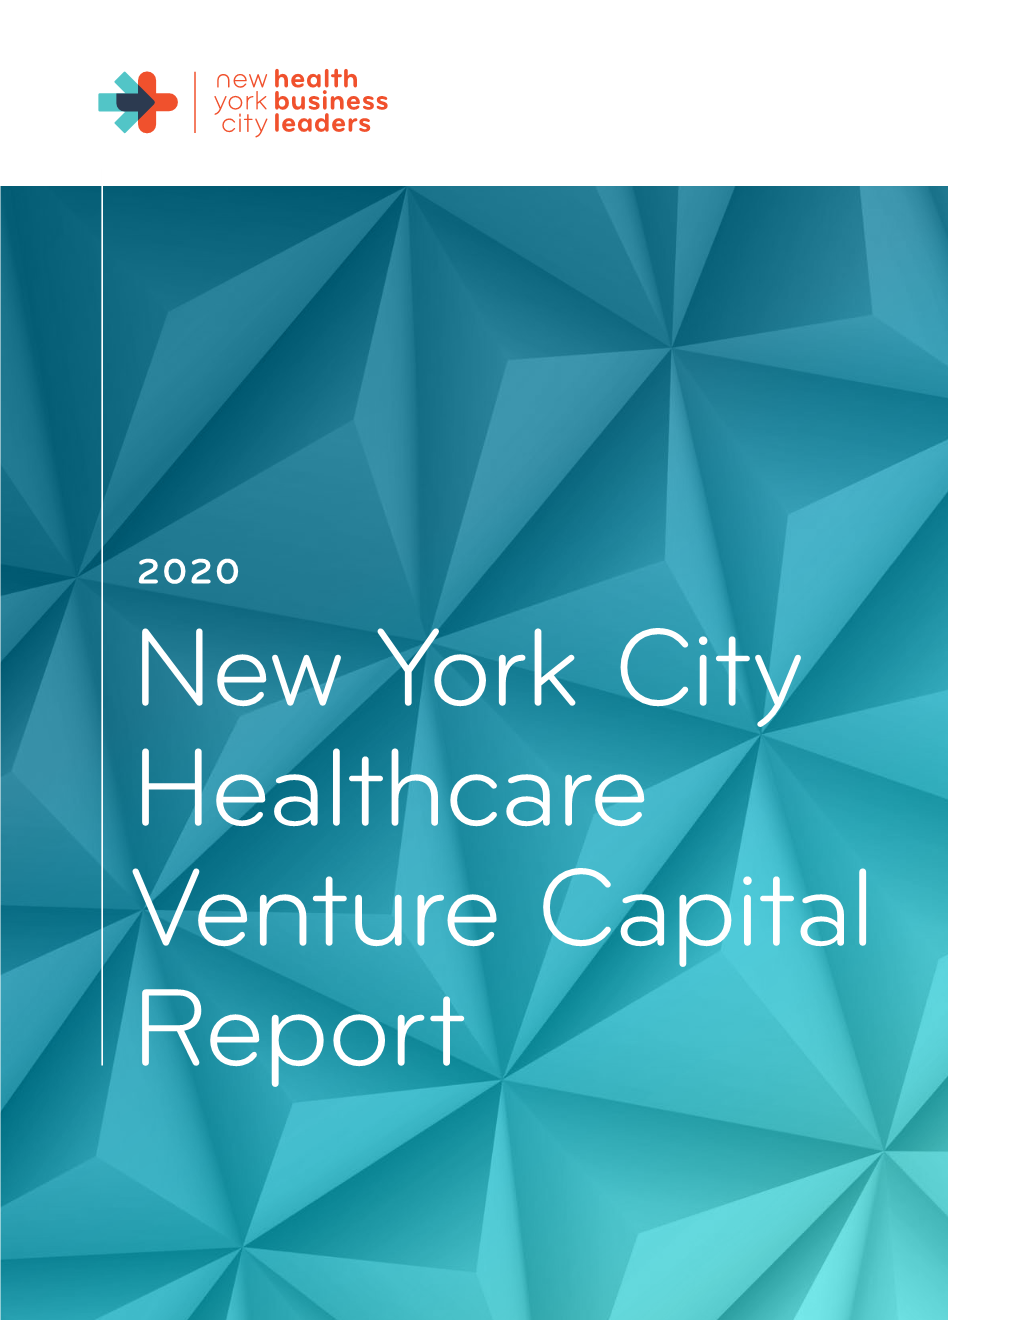 NYC Healthcare Venture Capital Report